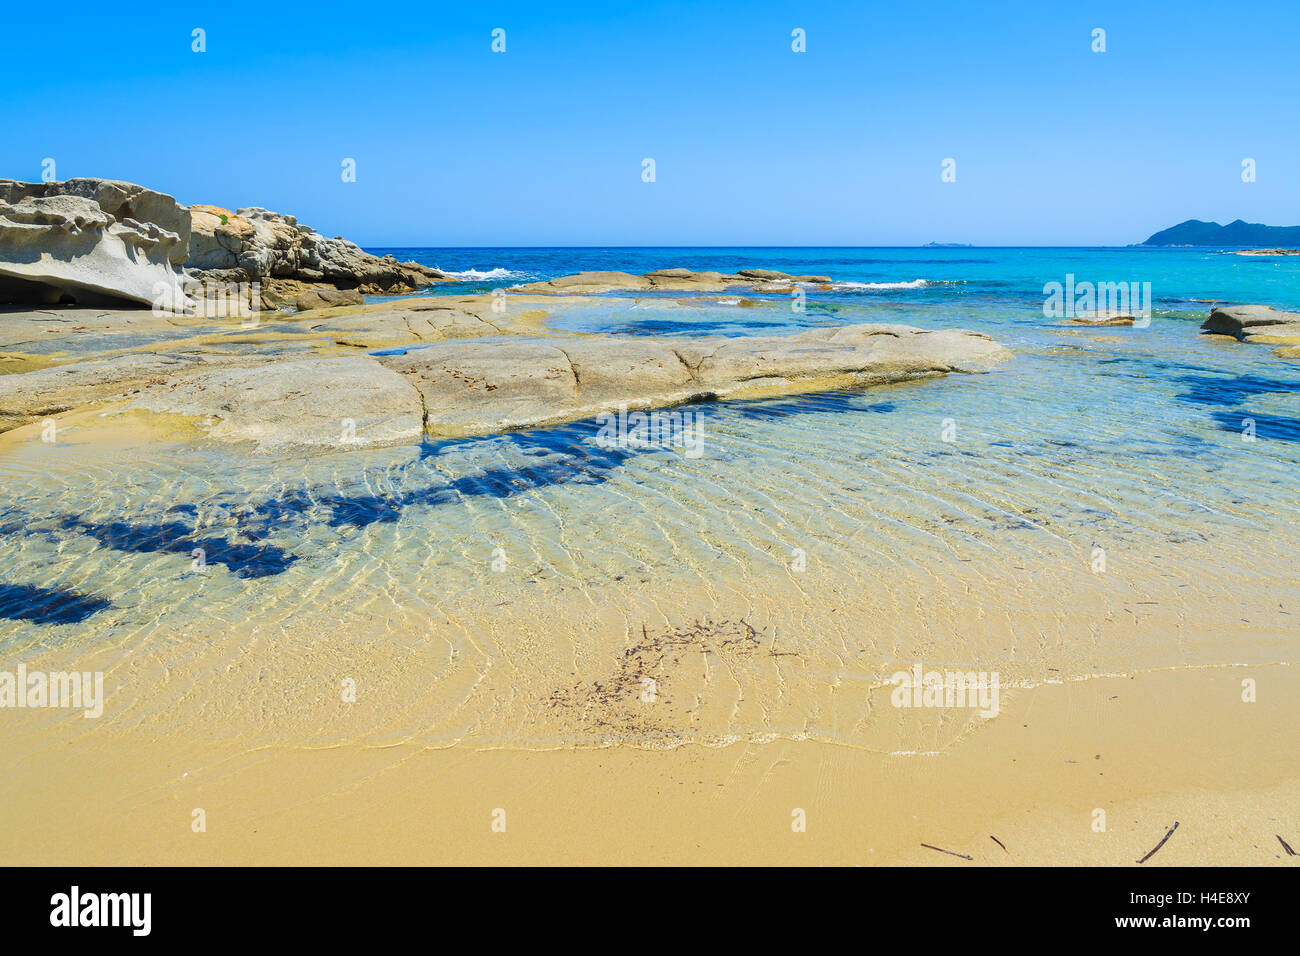 Peppino Strand und Kristall klaren türkisblauen Meer, Insel Sardinien, Italien Stockfoto